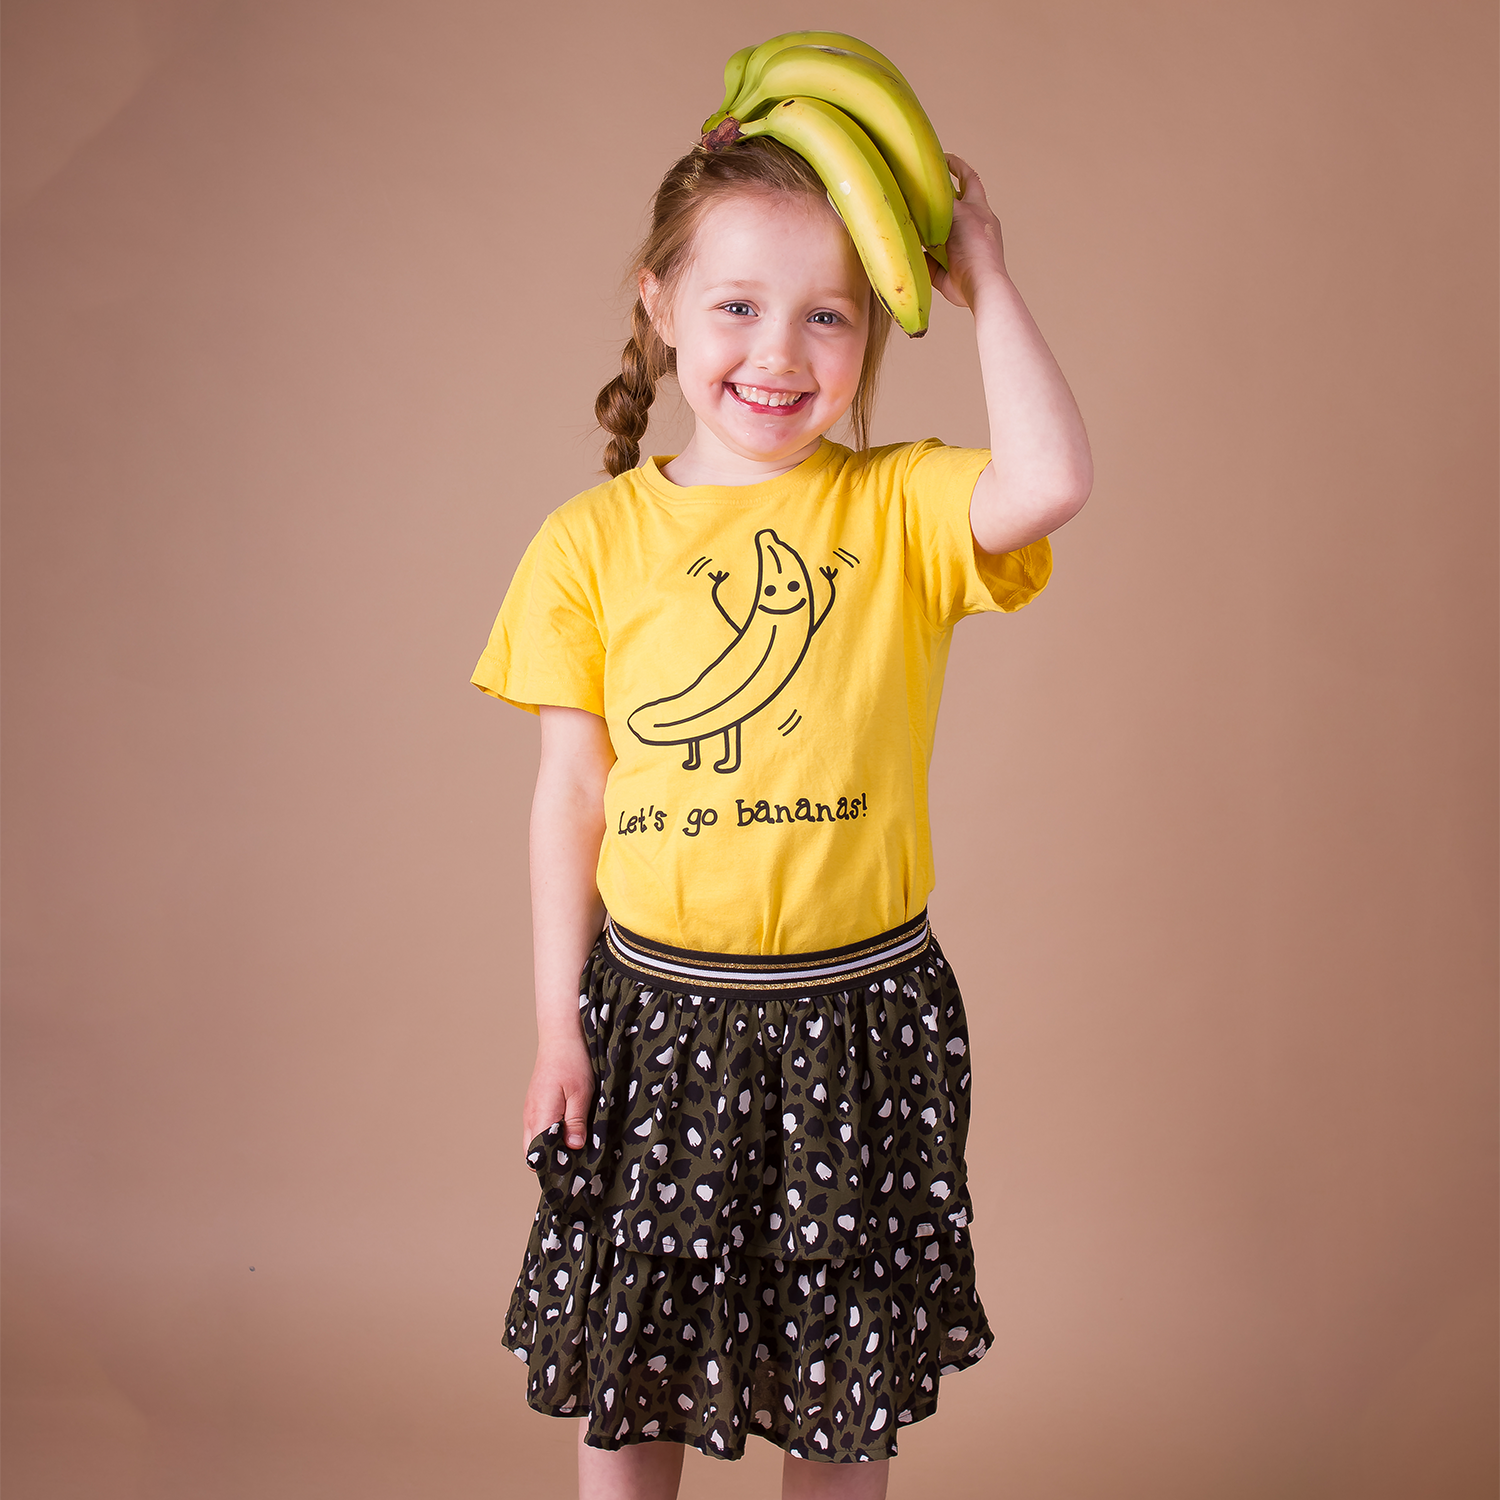 'Let's go bananas' kids shortsleeve shirt